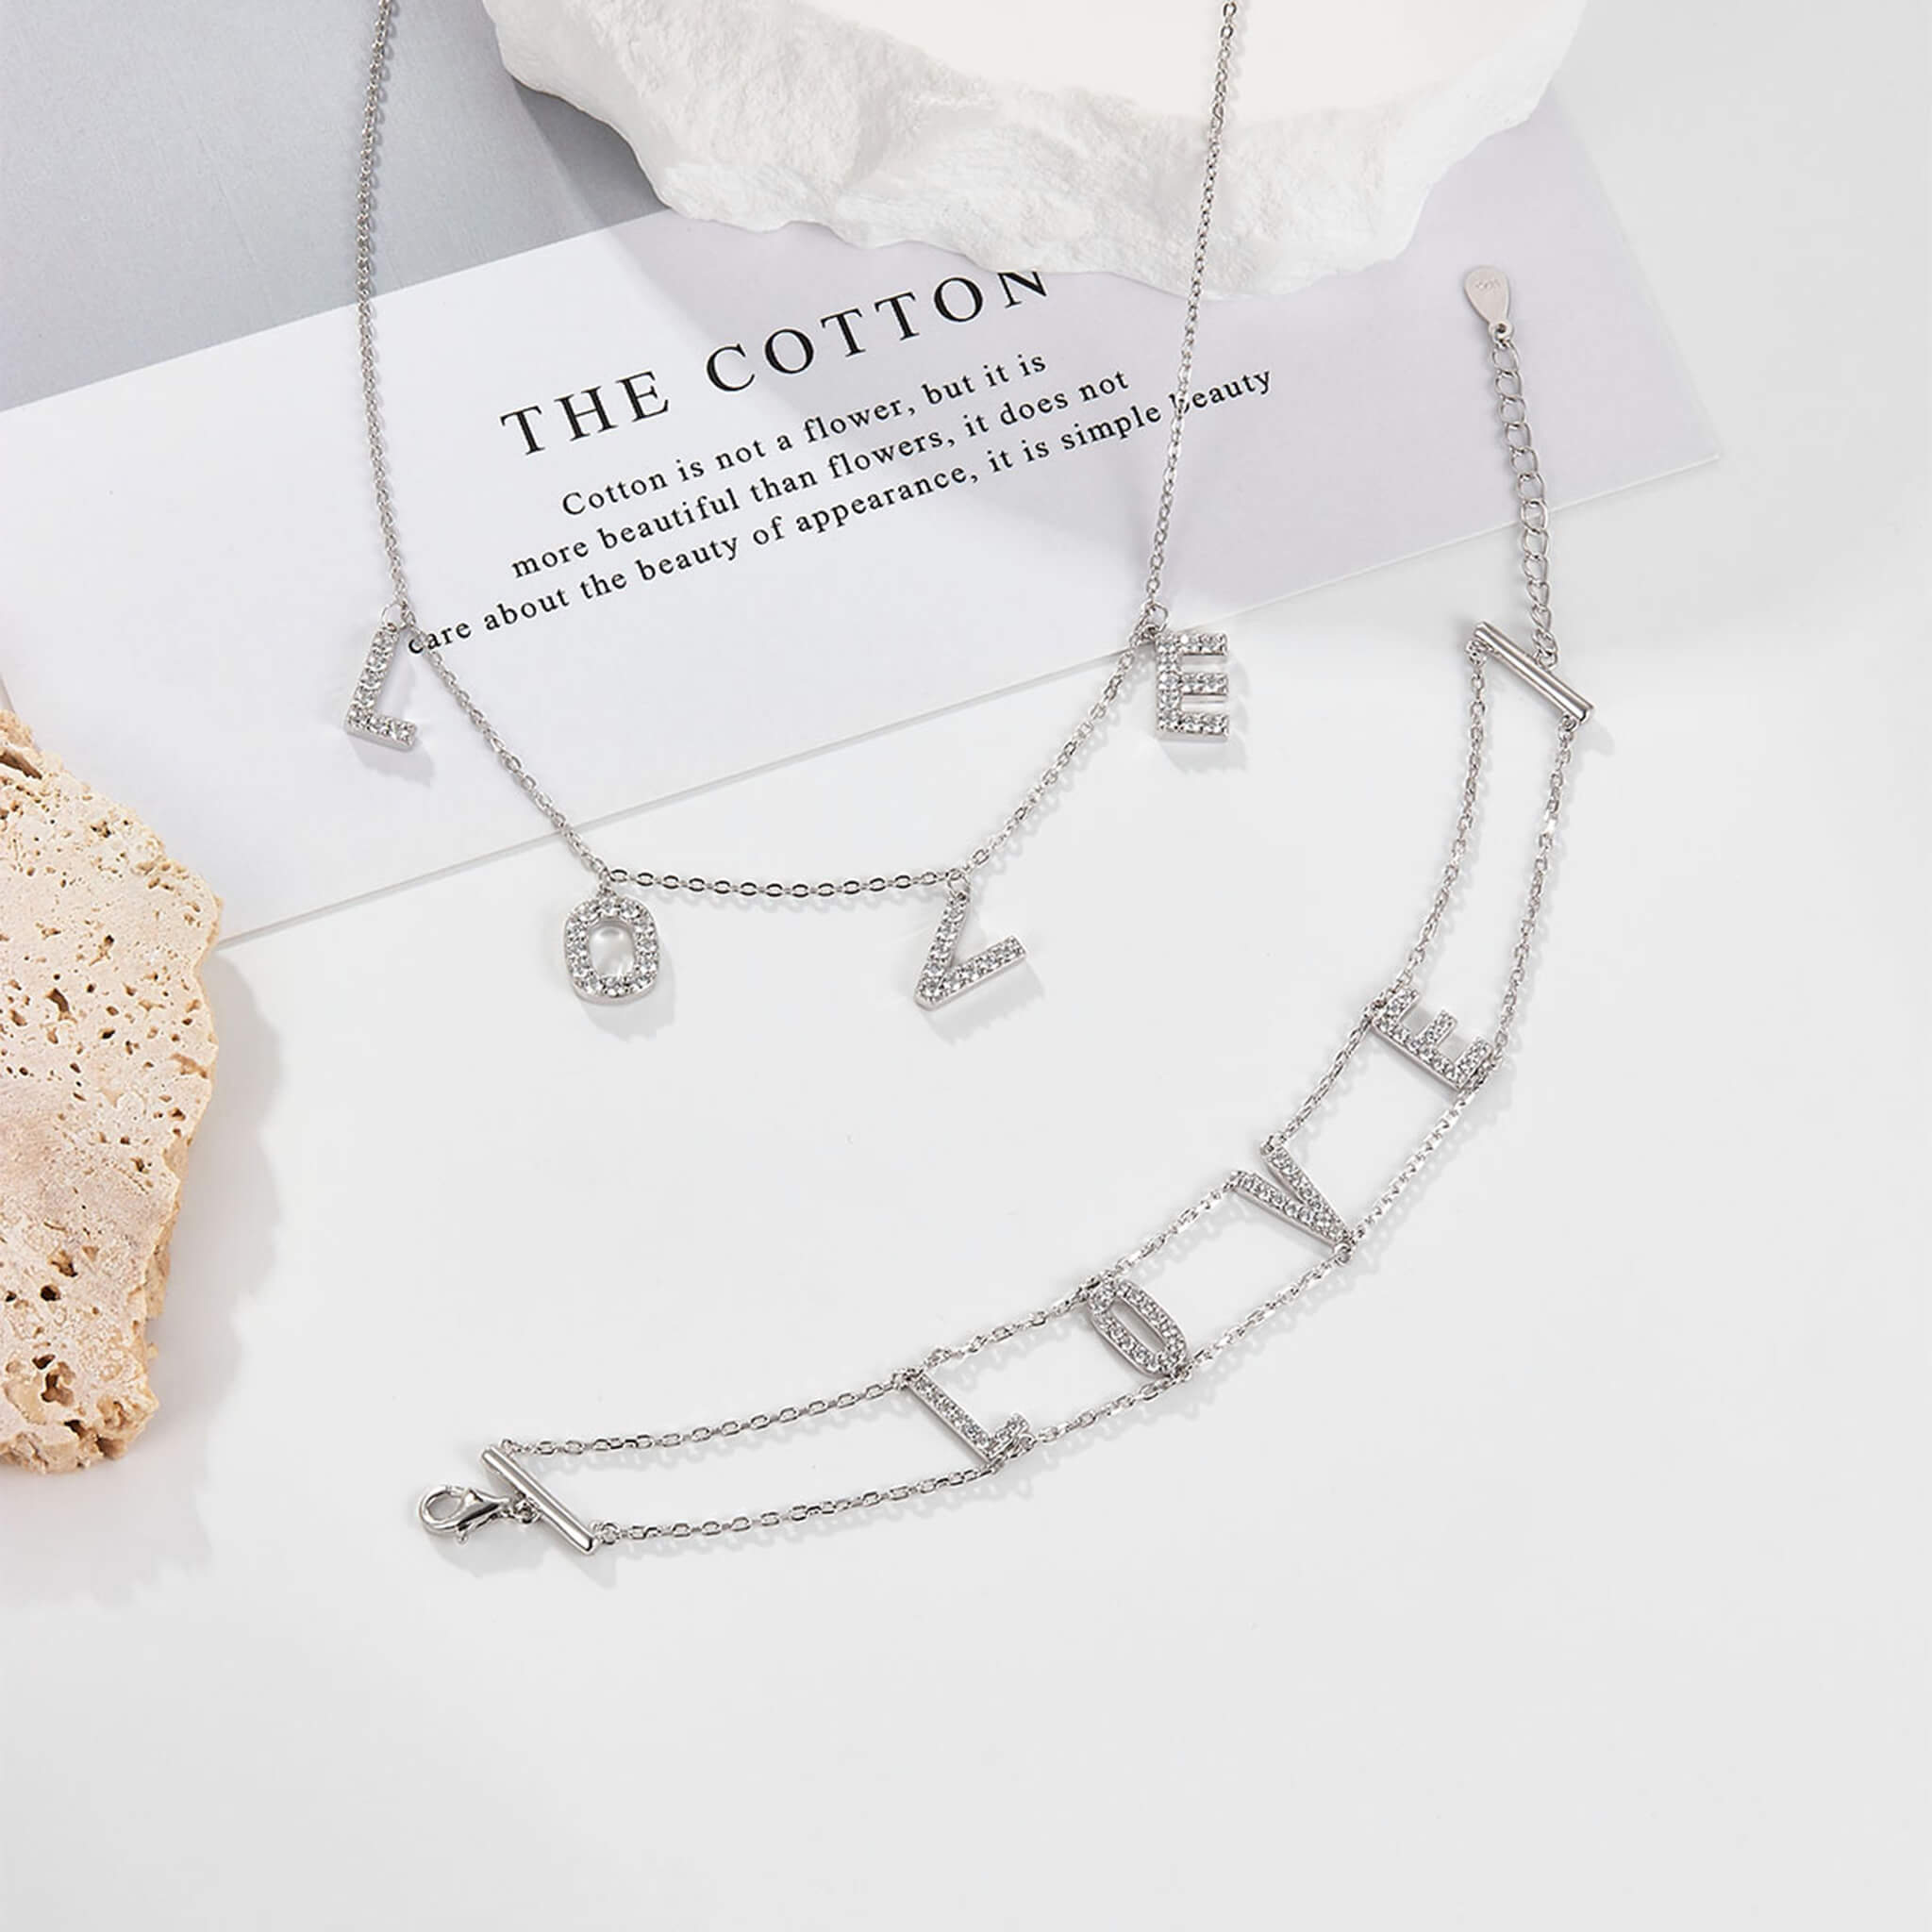 Minimalist S925 Silver LOVE Pendant Necklace and Bracelet Set with Inlaid Rhinestone  UponBasics 2PCS-SET Silver 